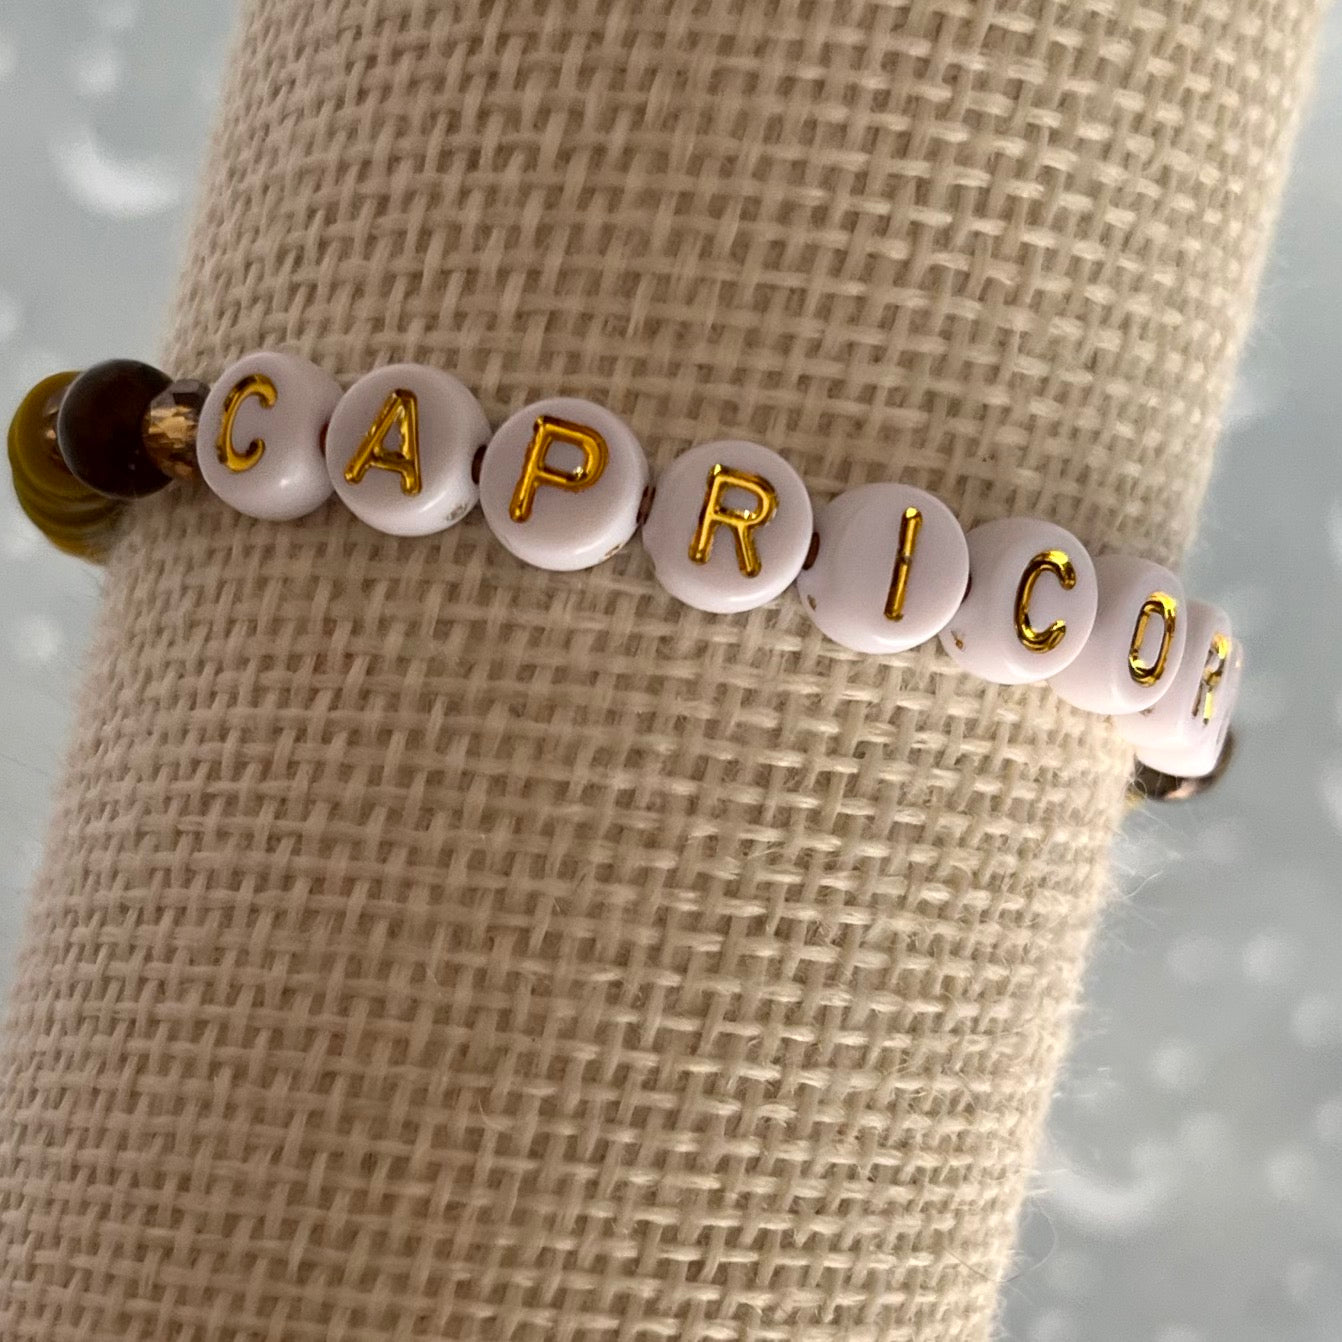 Gold Letter Beads 